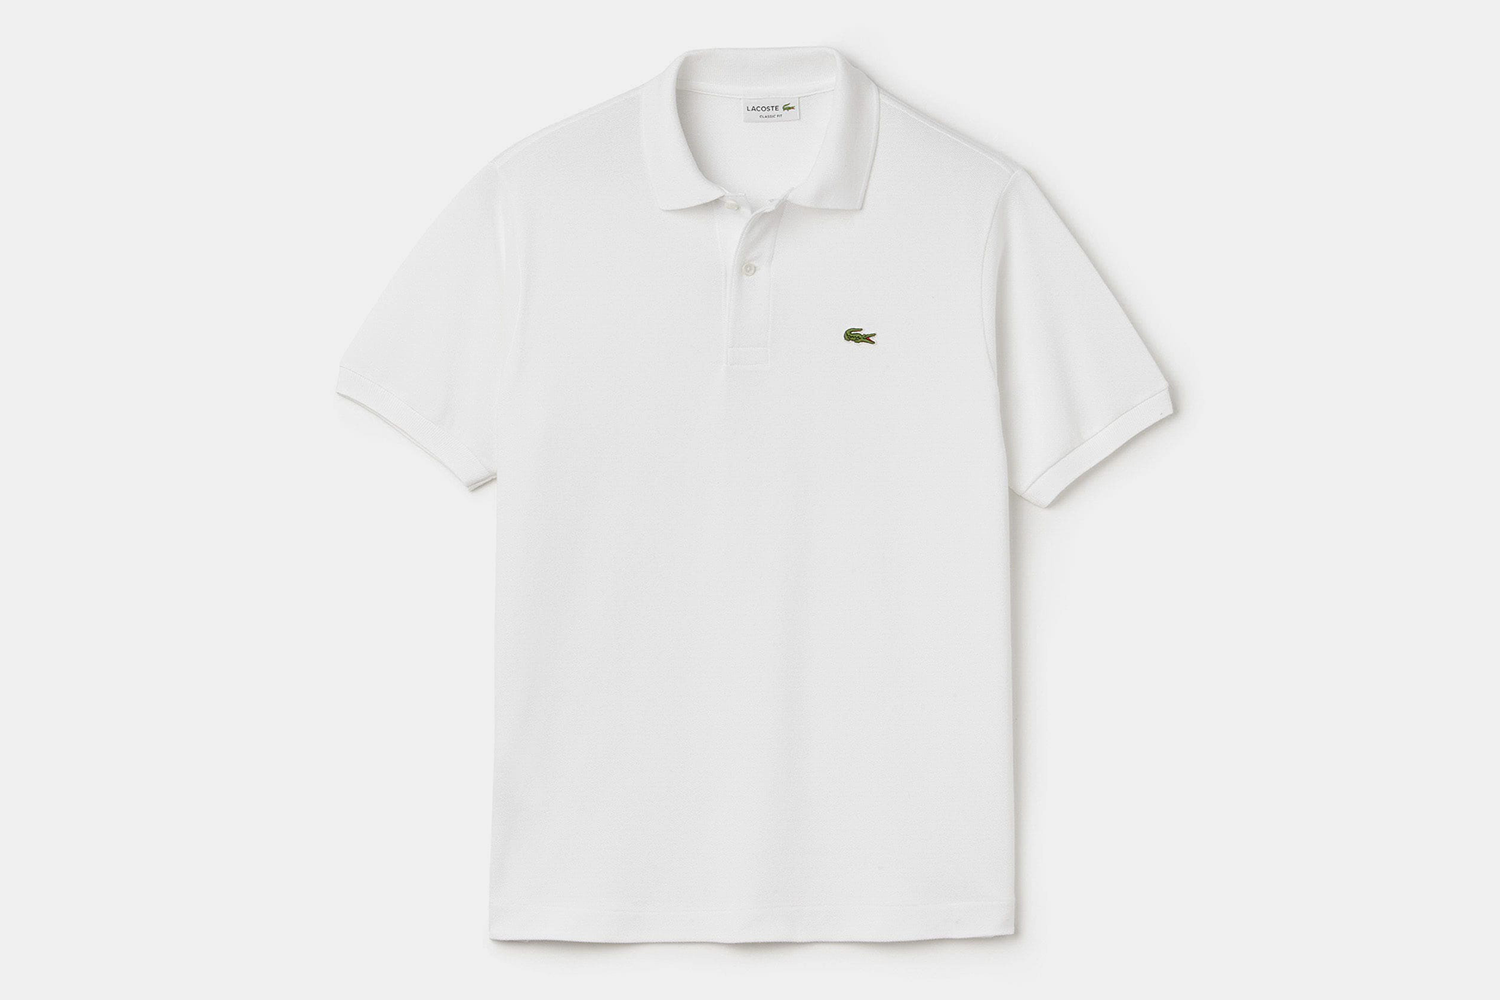 polo shirt with alligator logo